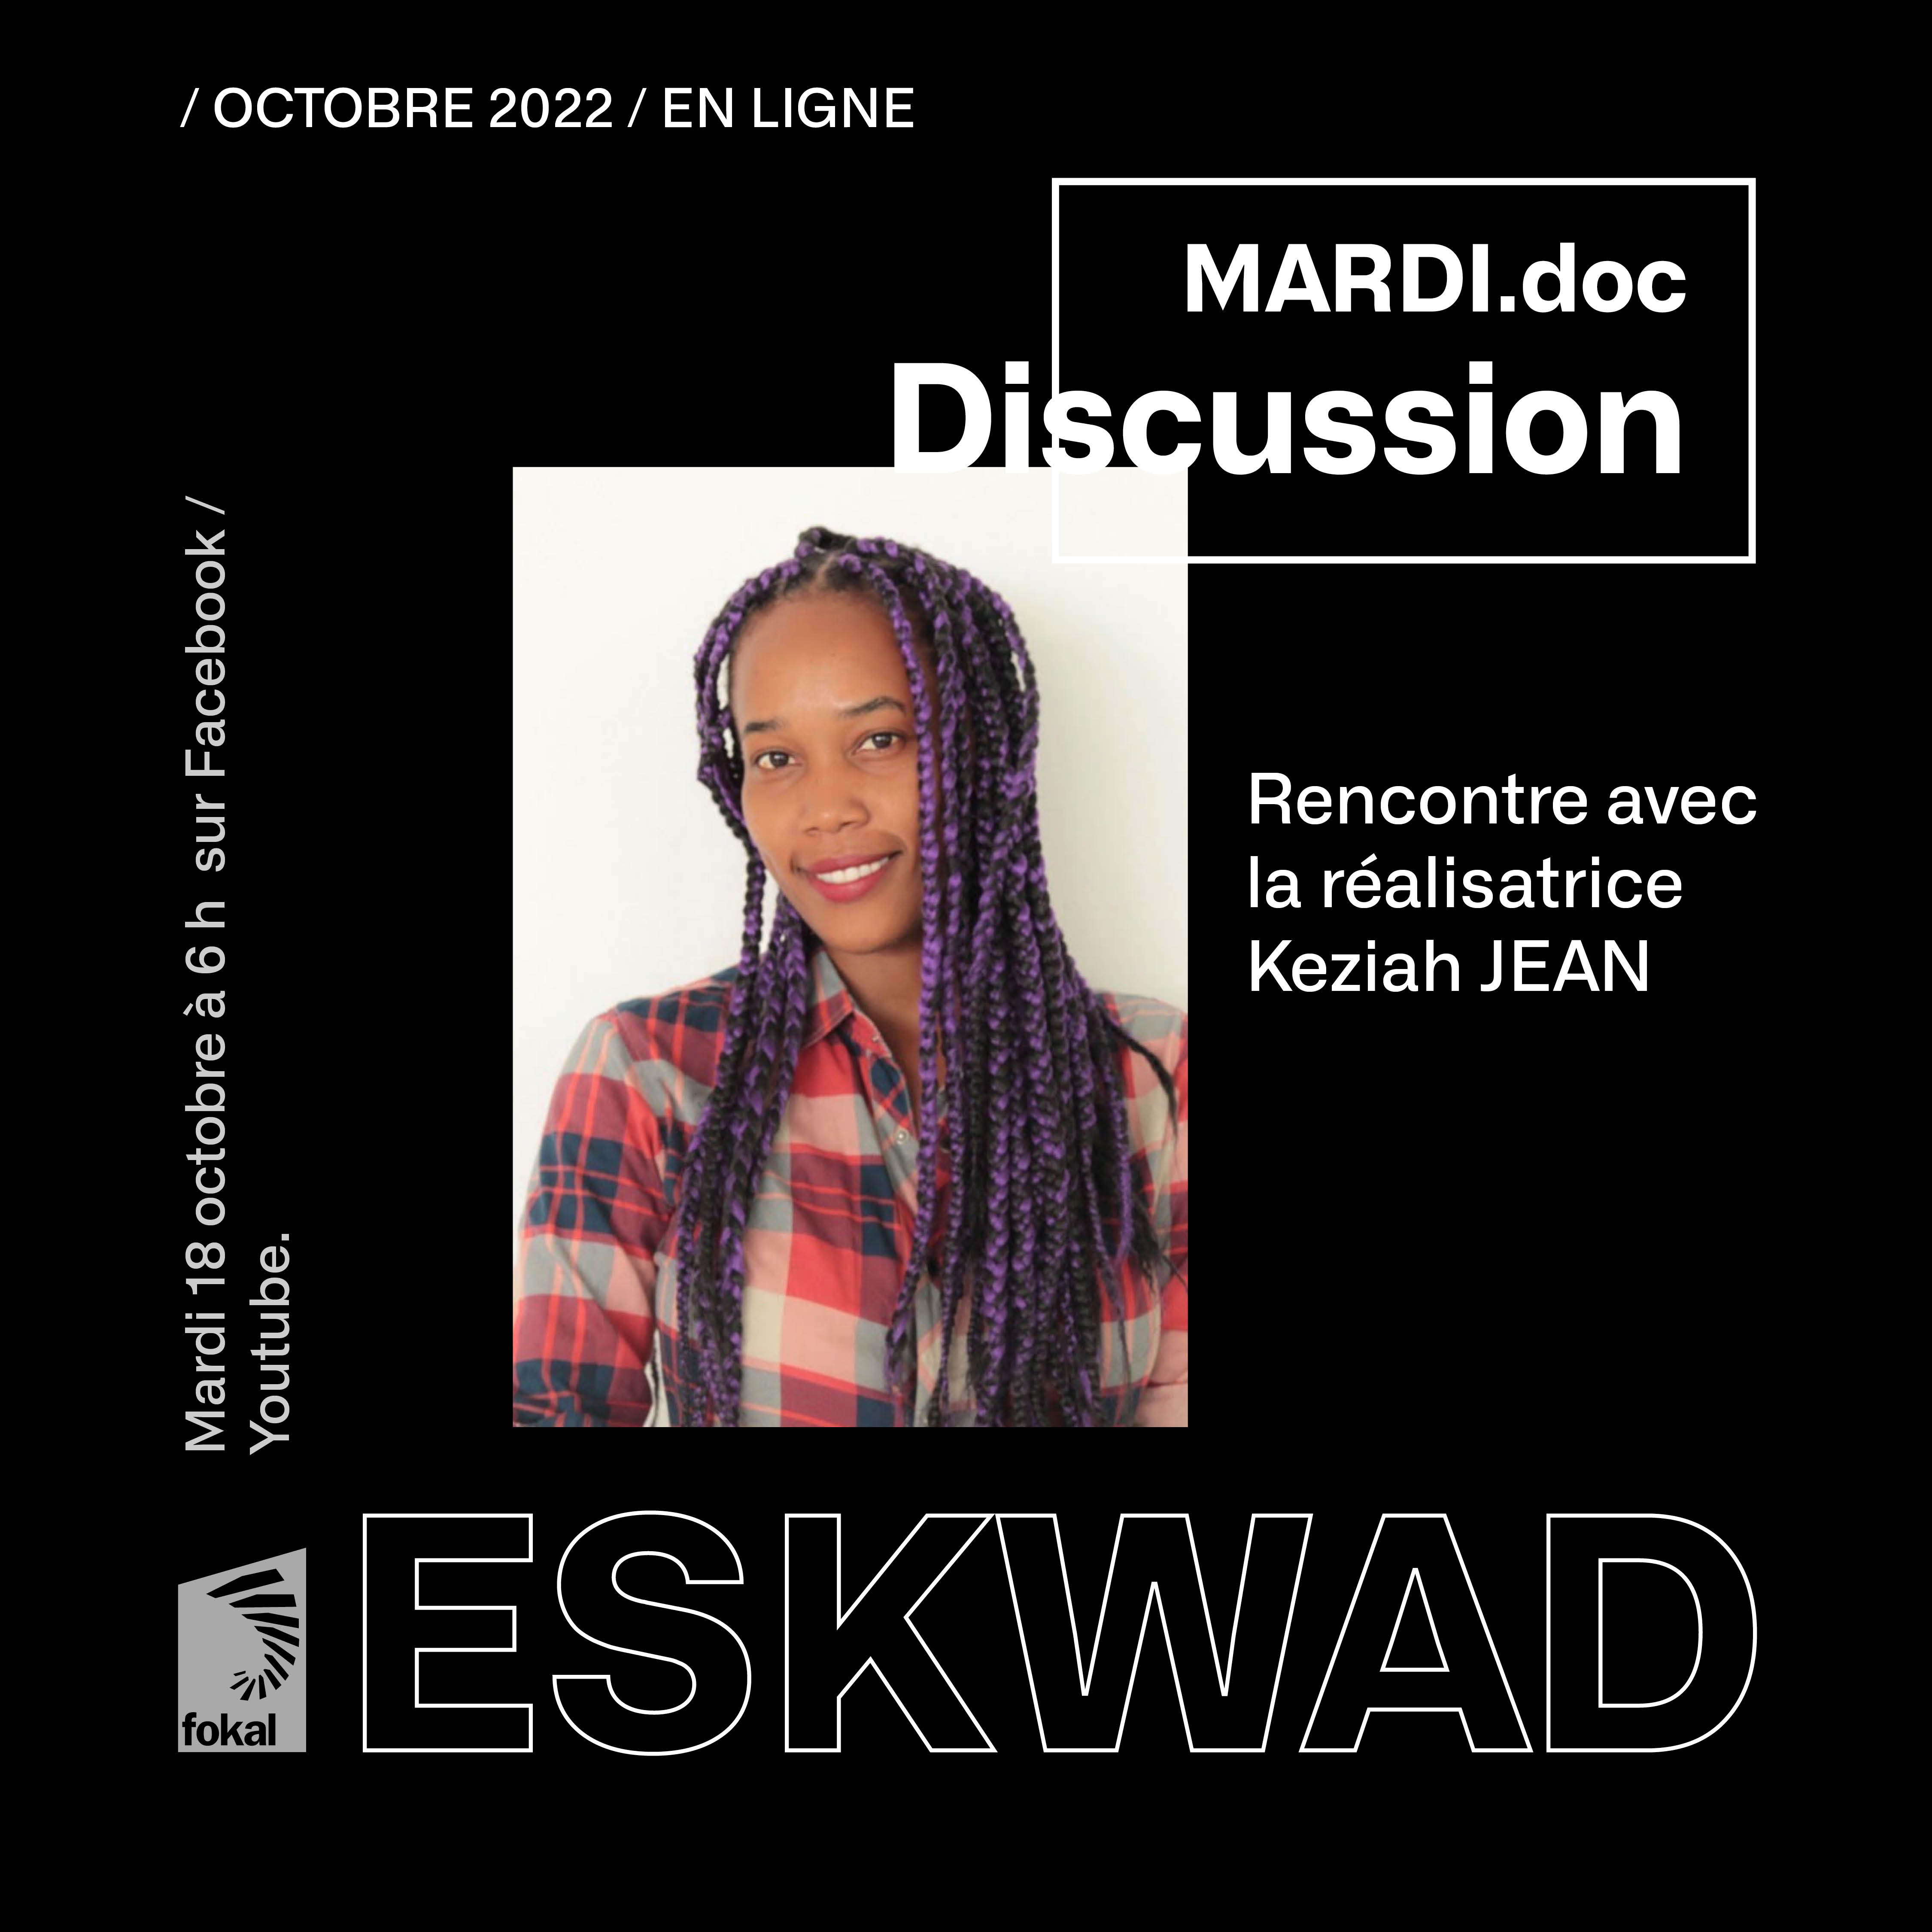 FOK MardiDoc Discussions Eskwad3